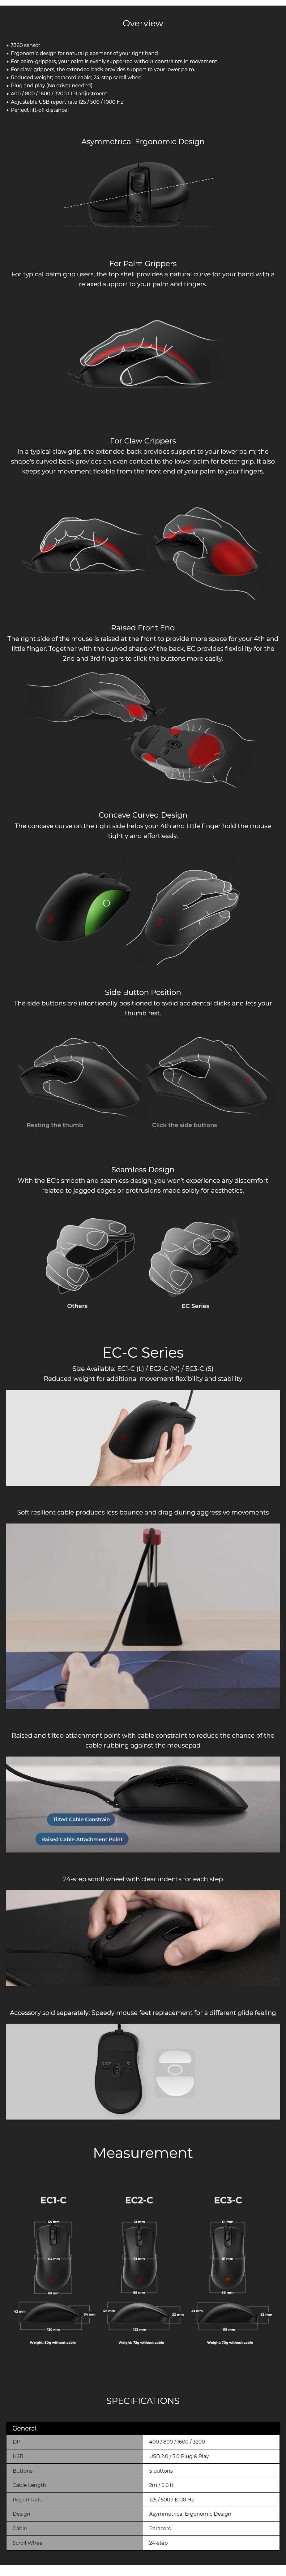 BenQ ZOWIE EC1-C Large Ergonomic Optical Gaming Mouse - Black - Desktop Overview 1